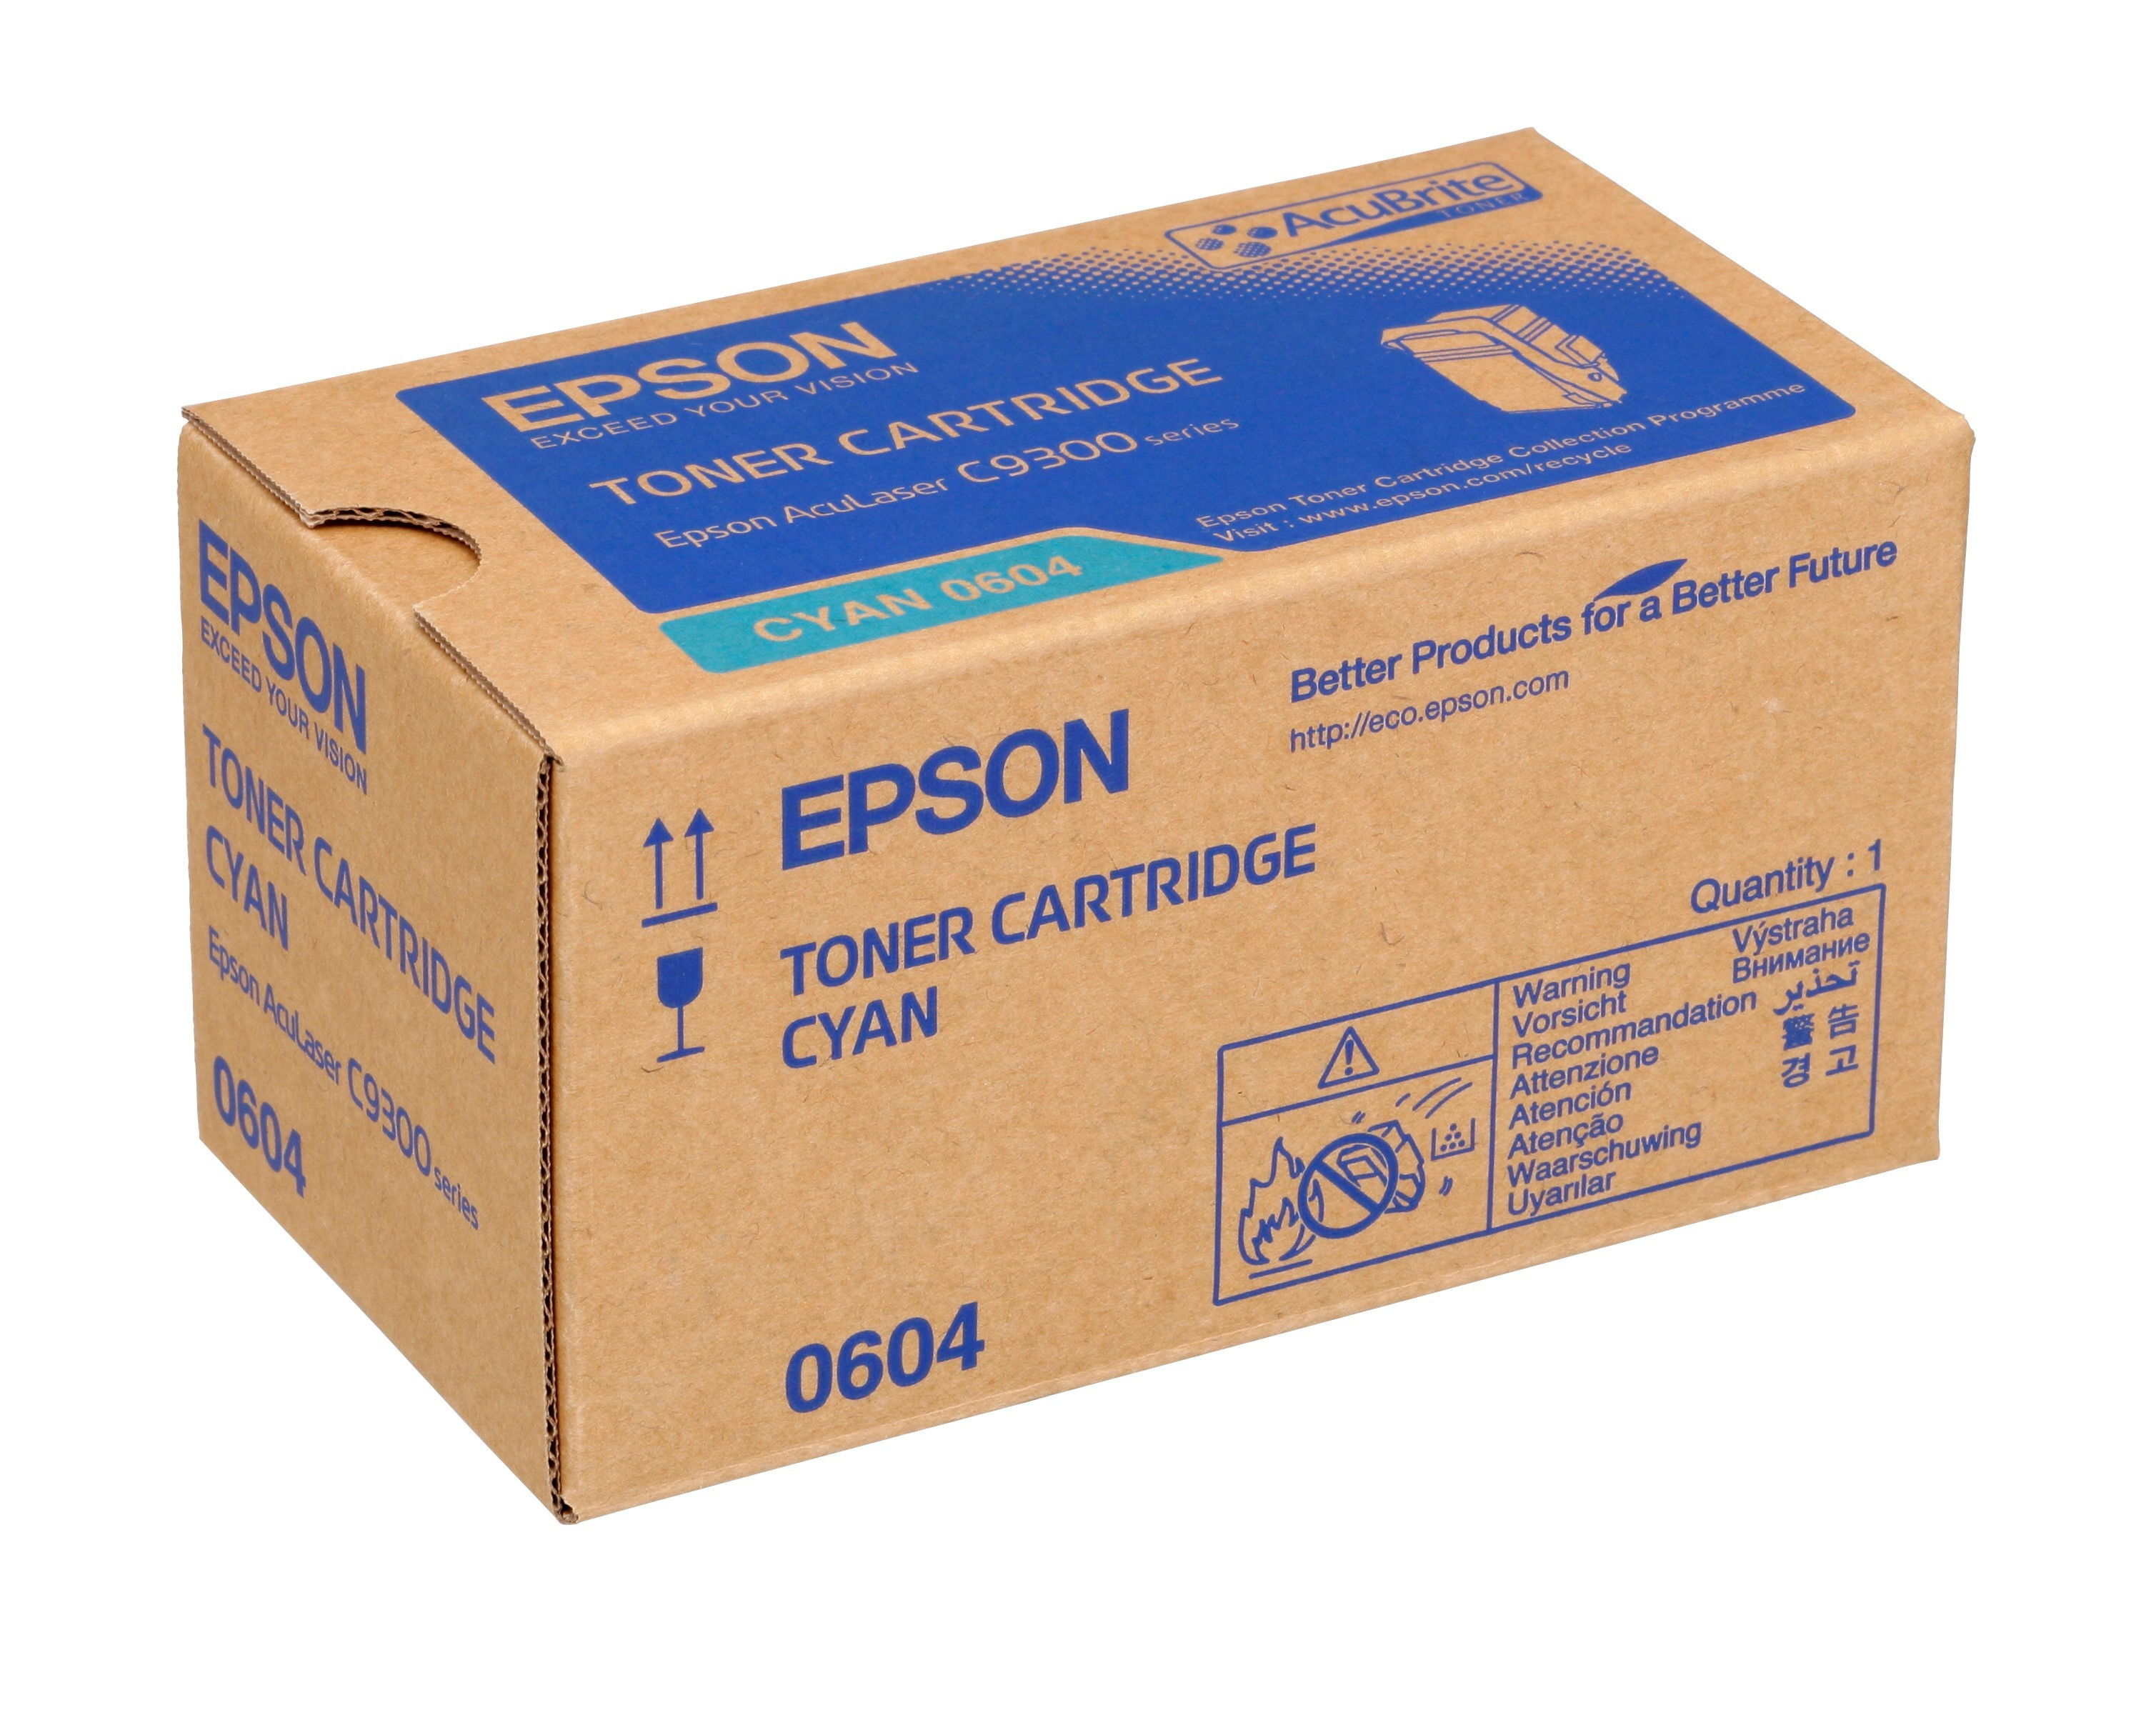 Epson C9300 Toner Yellow 7,5K (Eredeti)